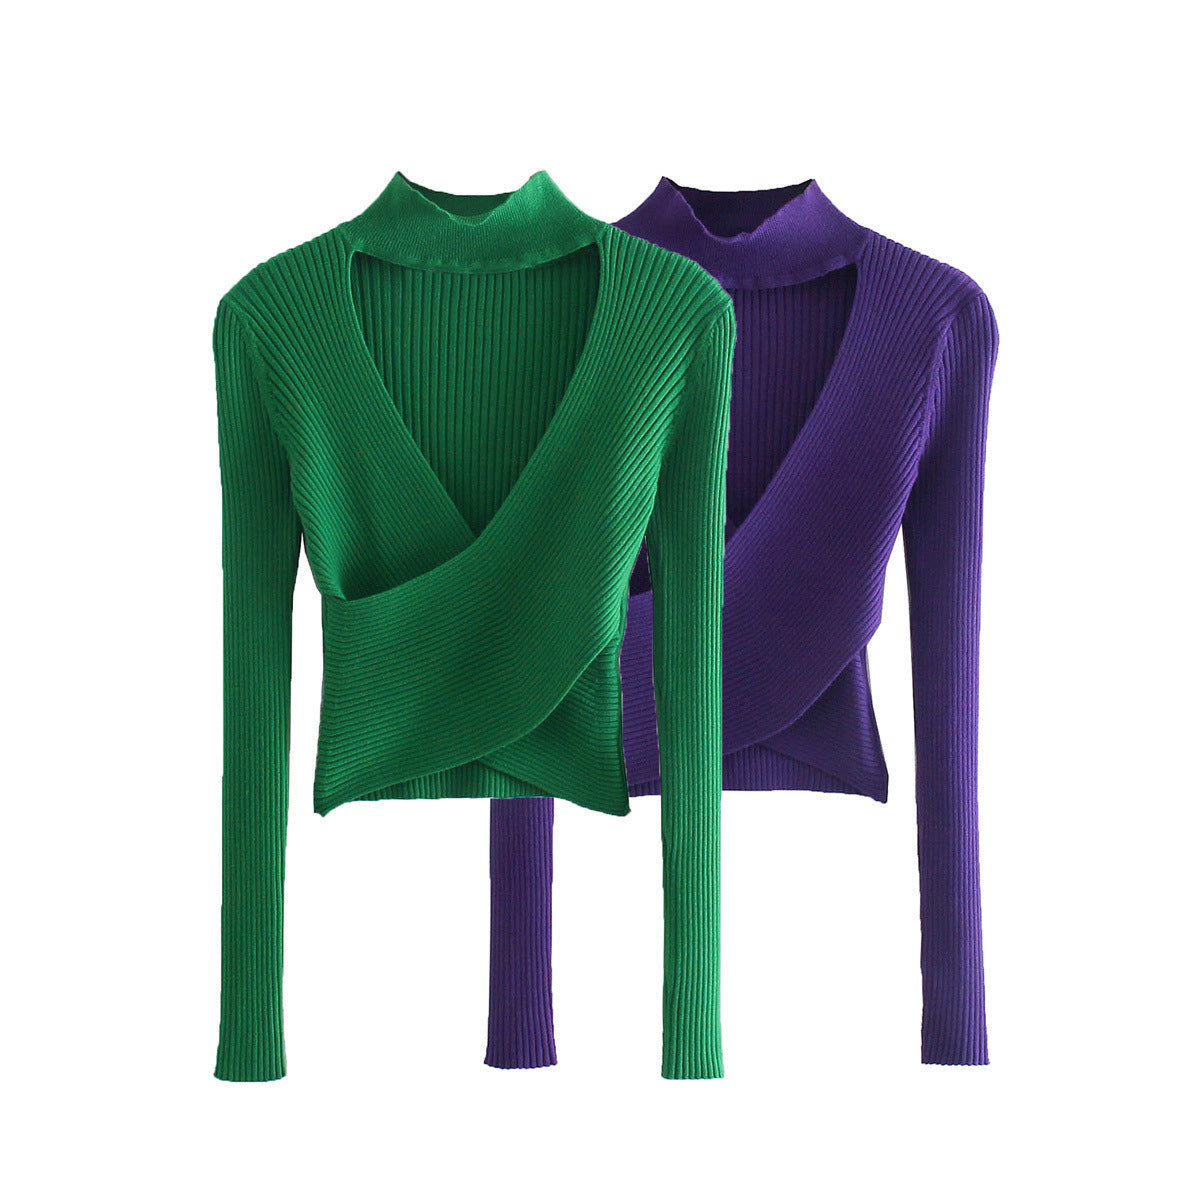 Designed Cross-cut Knit Sweater Top Sexy Halter